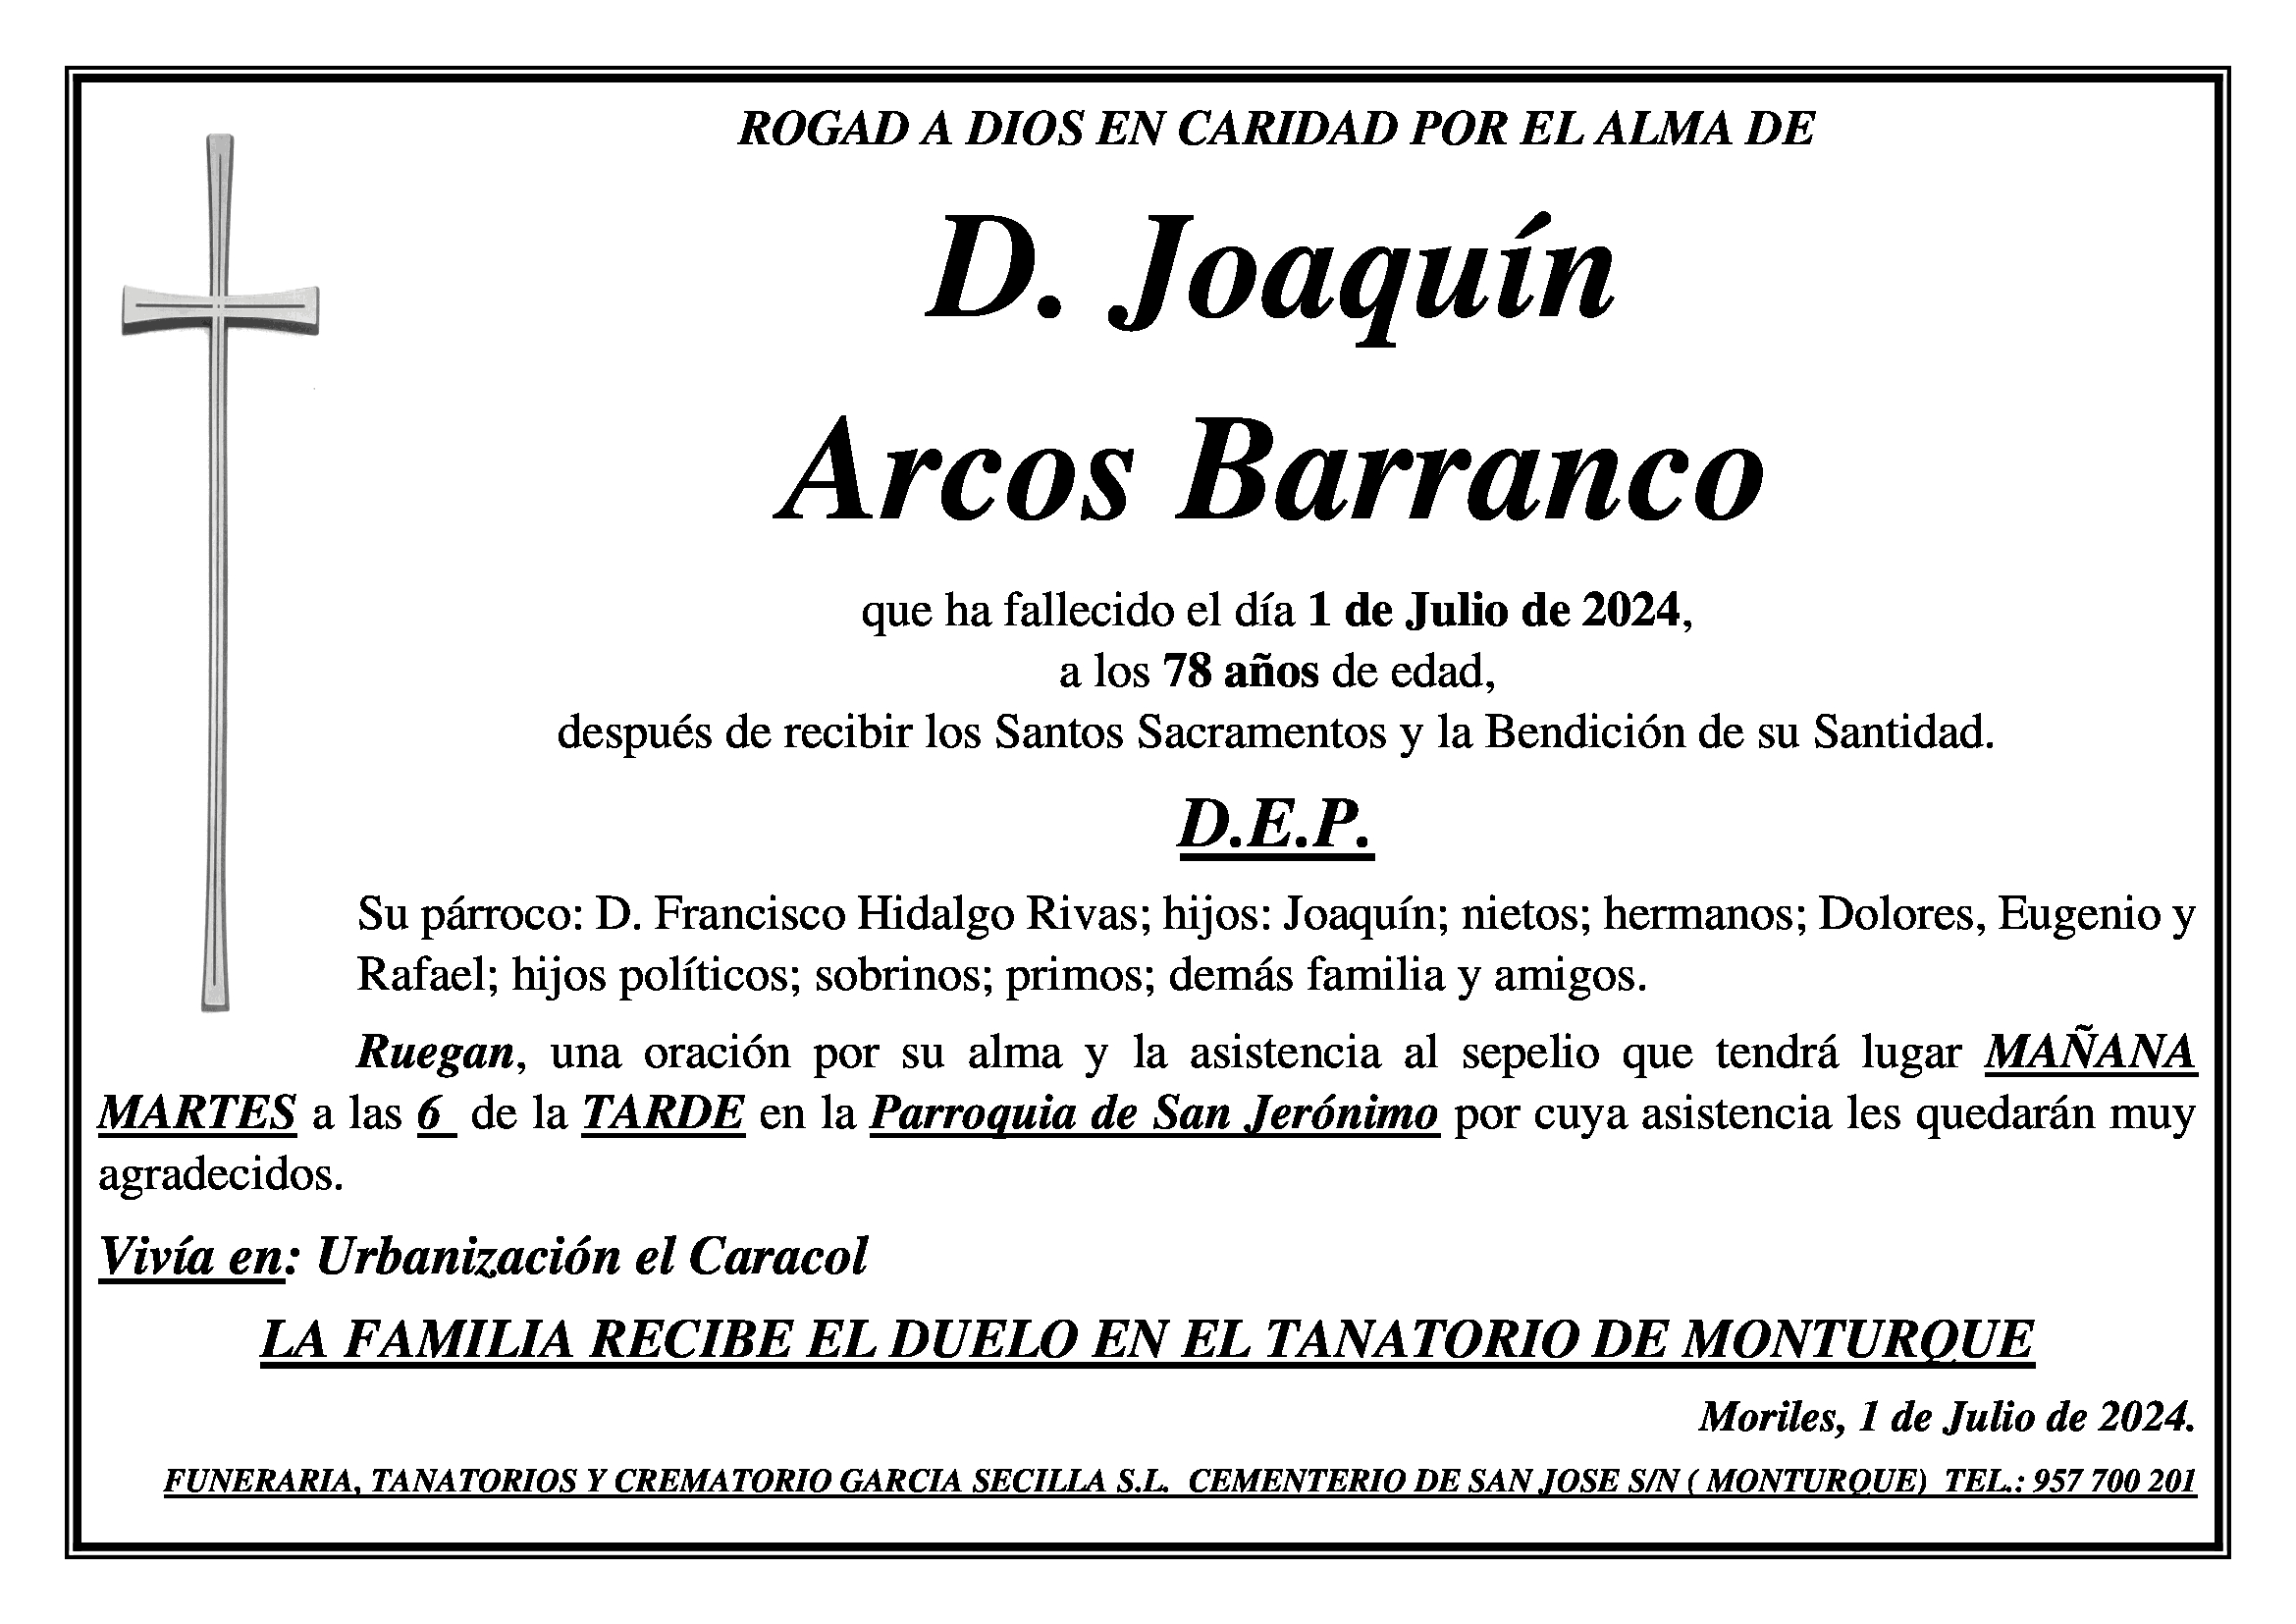 SEPELIO DE D. JOAQUIN ARCOS BARRANCO